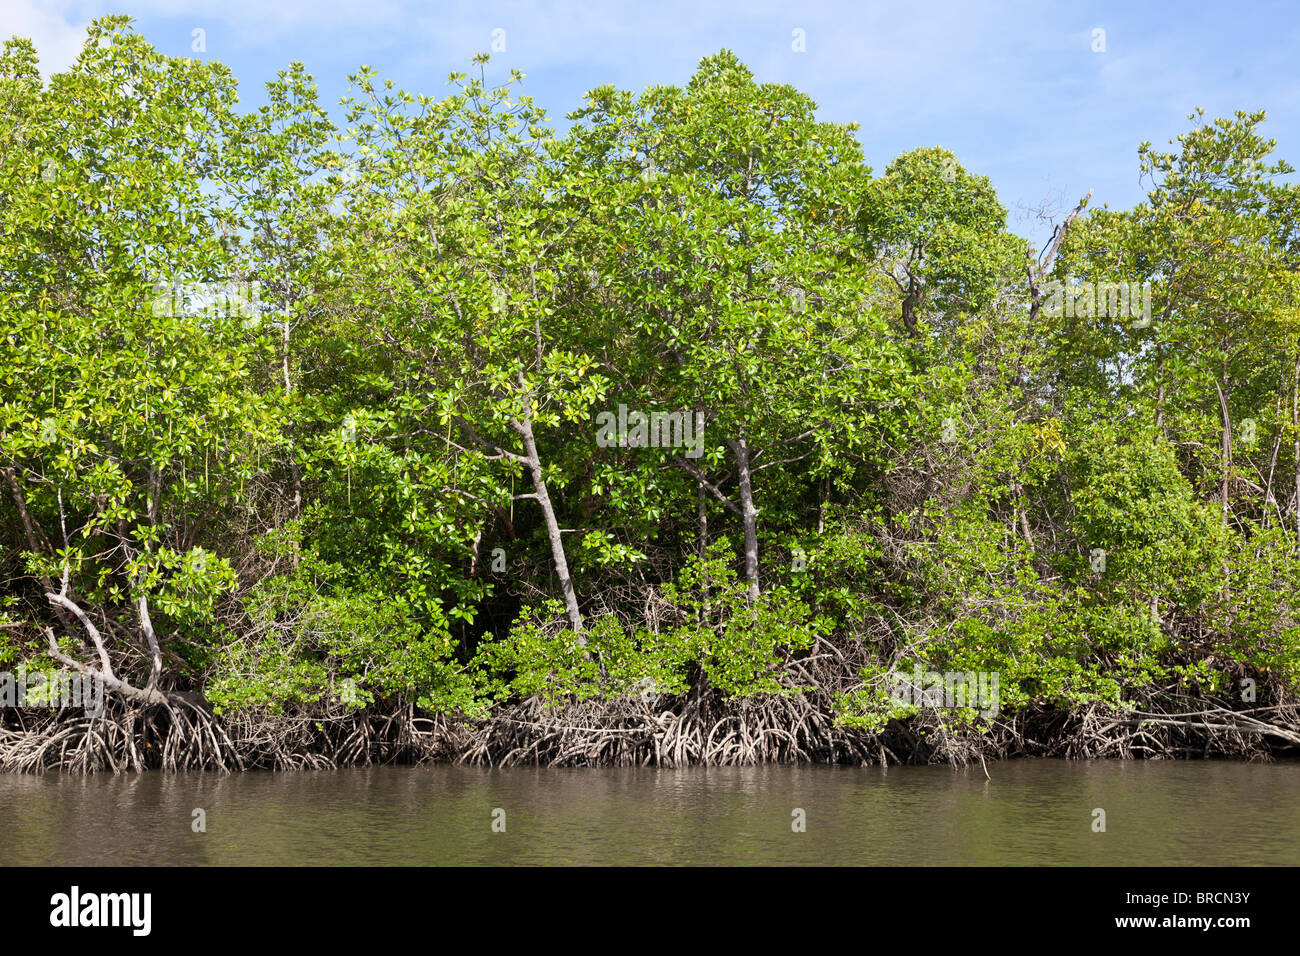 Mangroves growing at edge of tidal estuary, Sabah, Borneo Stock Photo